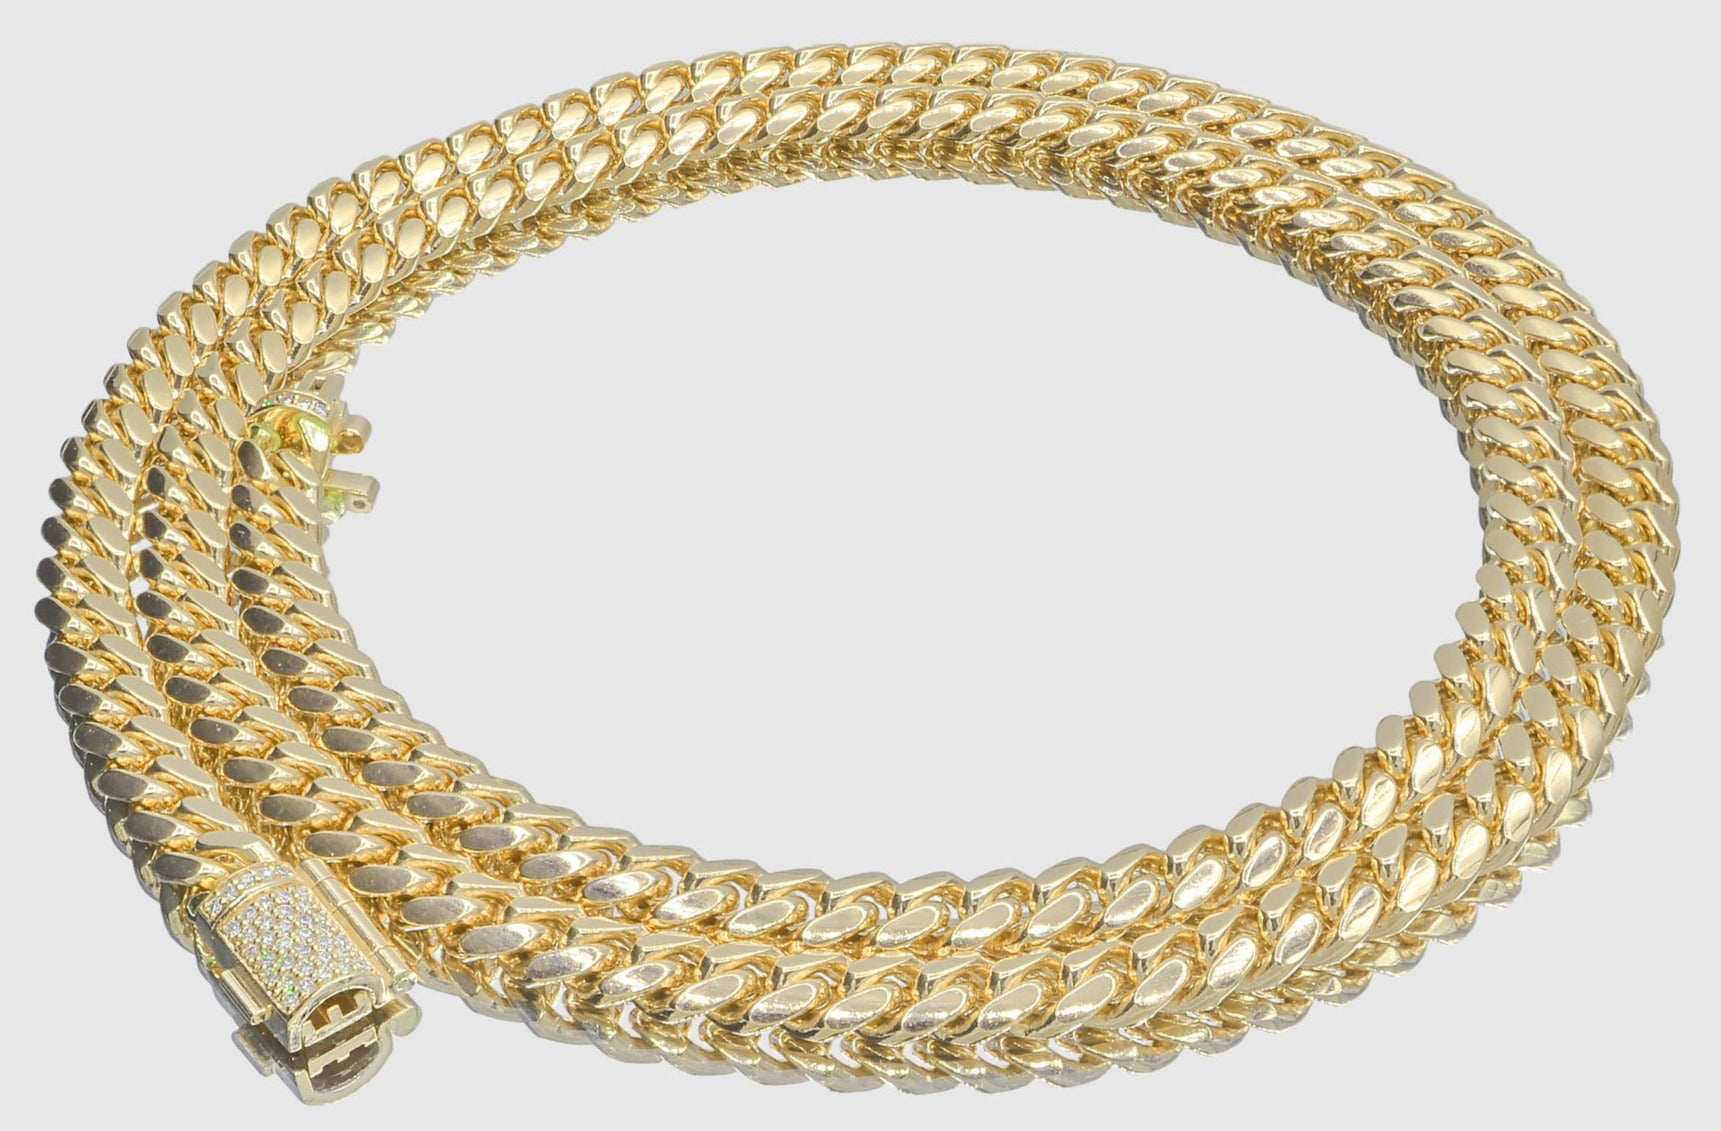 Miami Cuban Link Chain - 6mm - Gold | Lirys Jewelry Yellow / 10kt Gold / 18